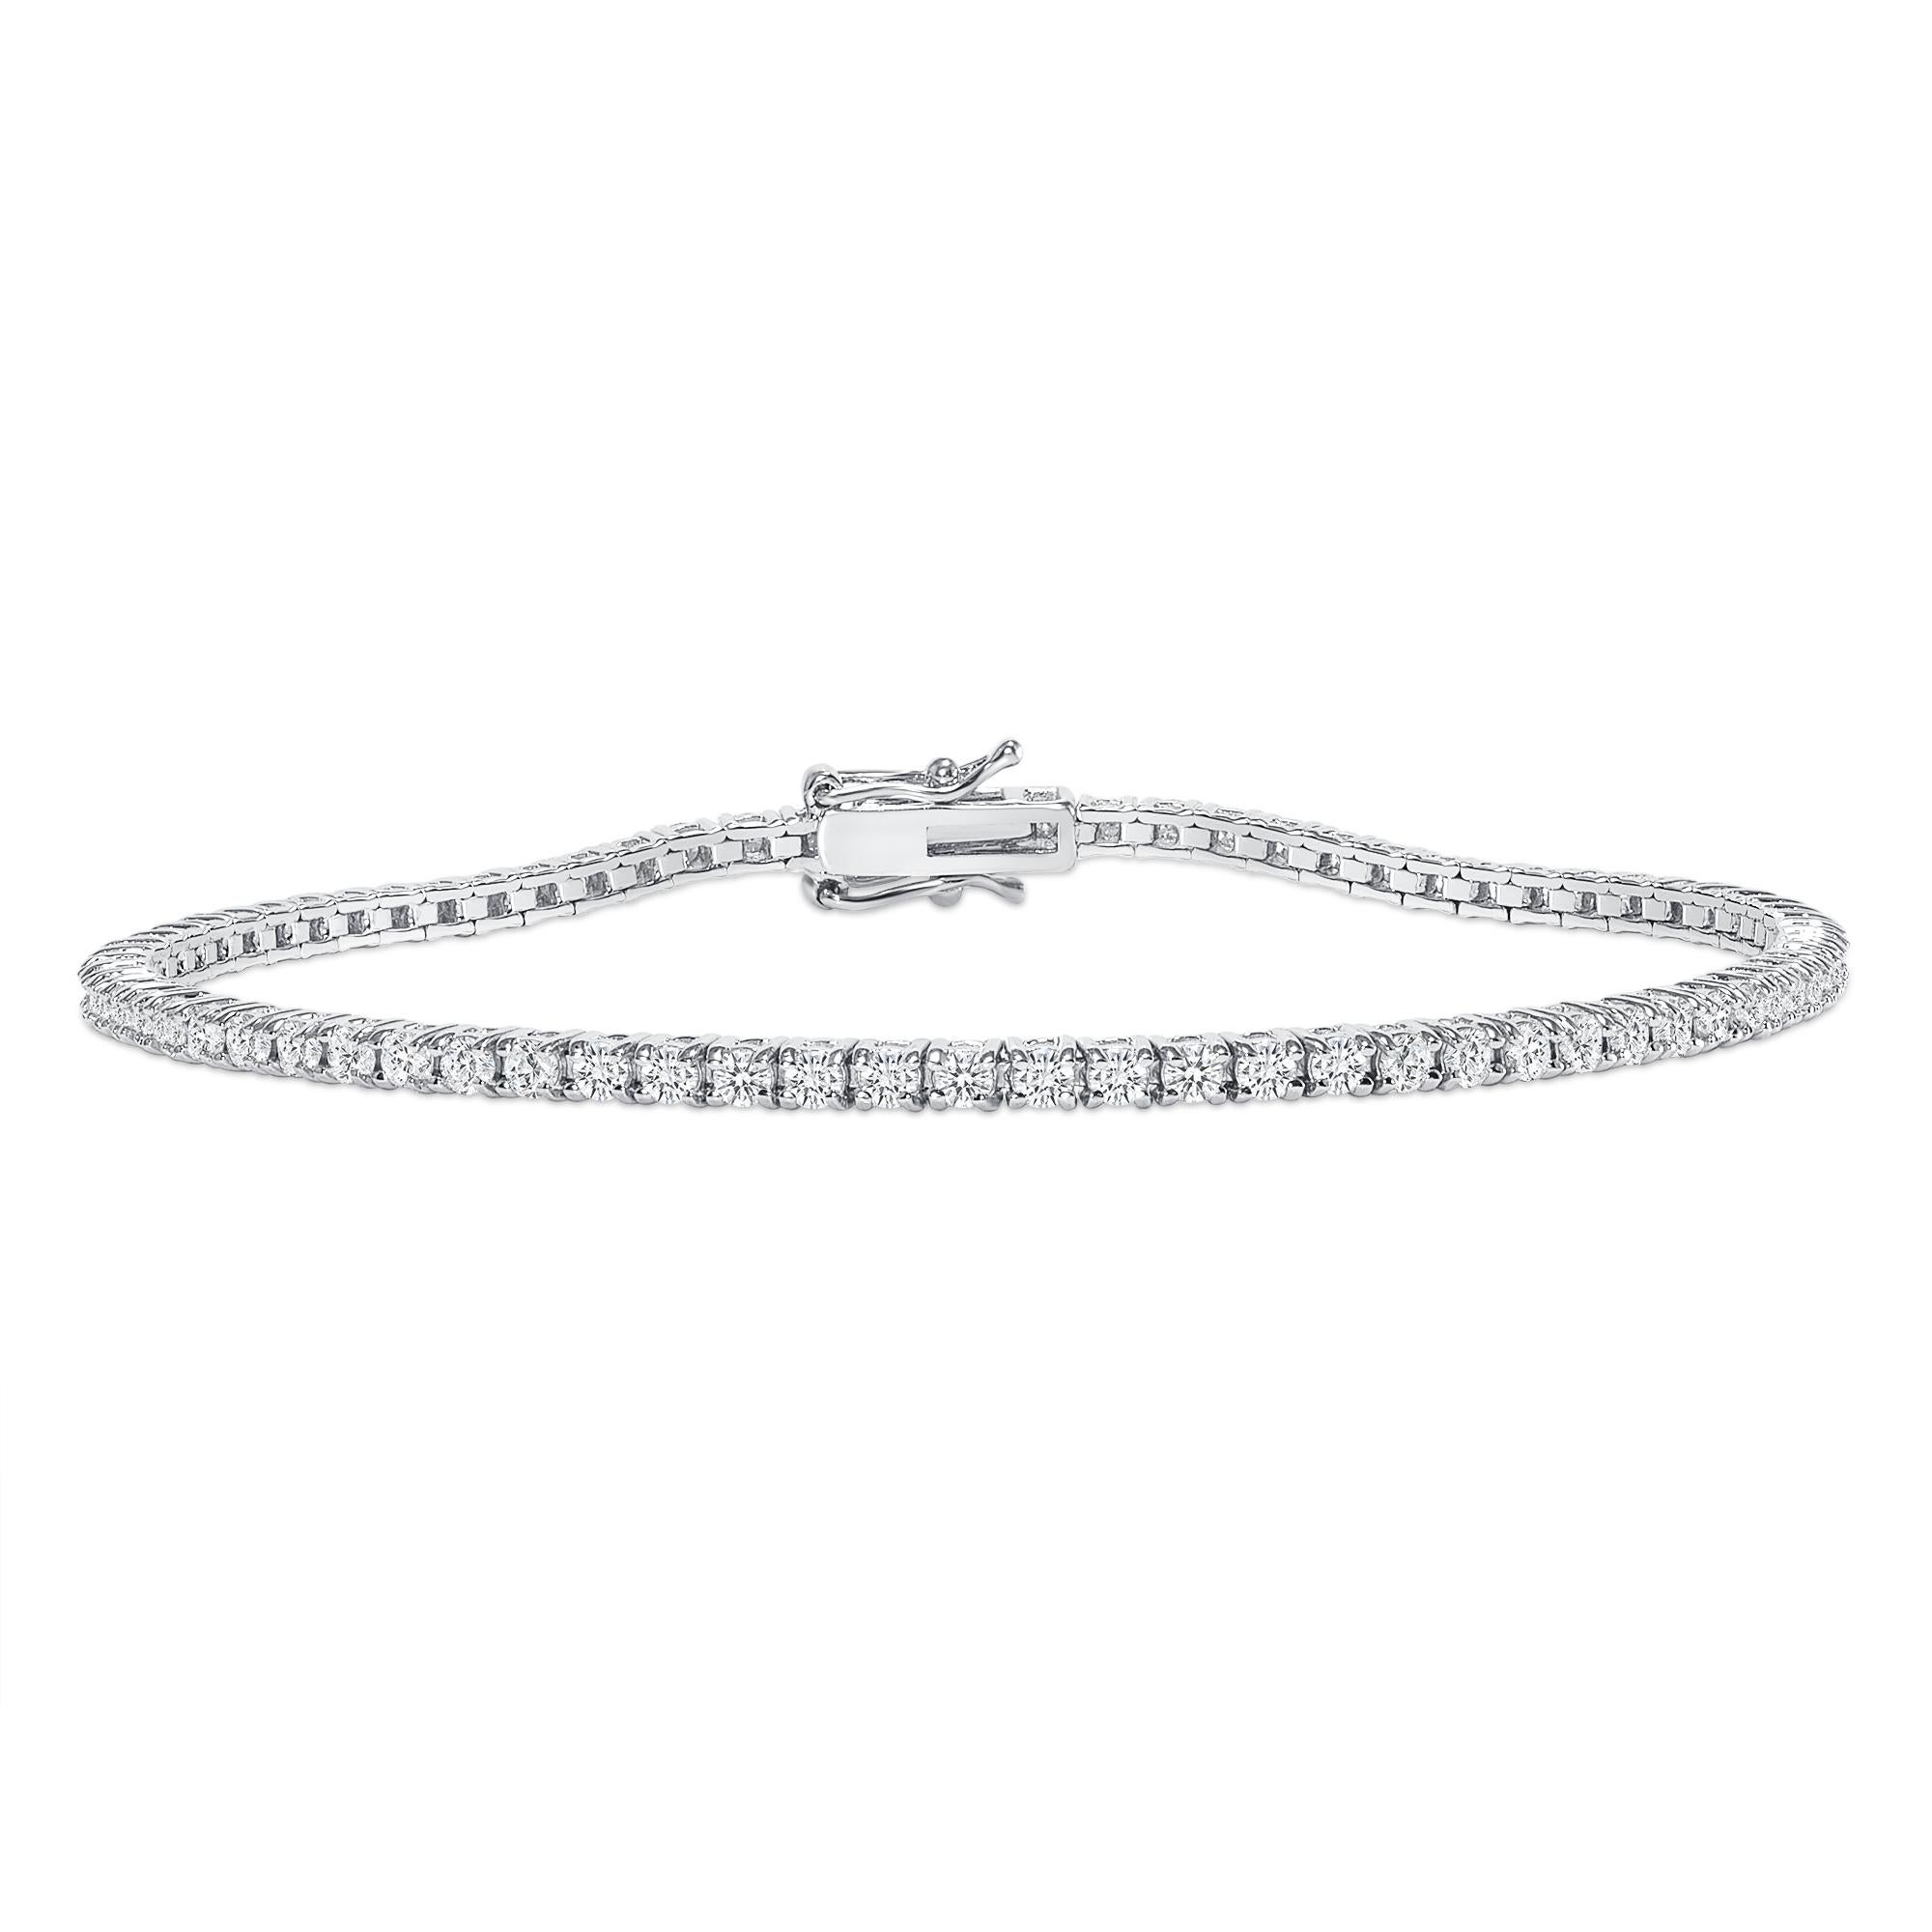 2 carat diamond tennis bracelet 14k white gold